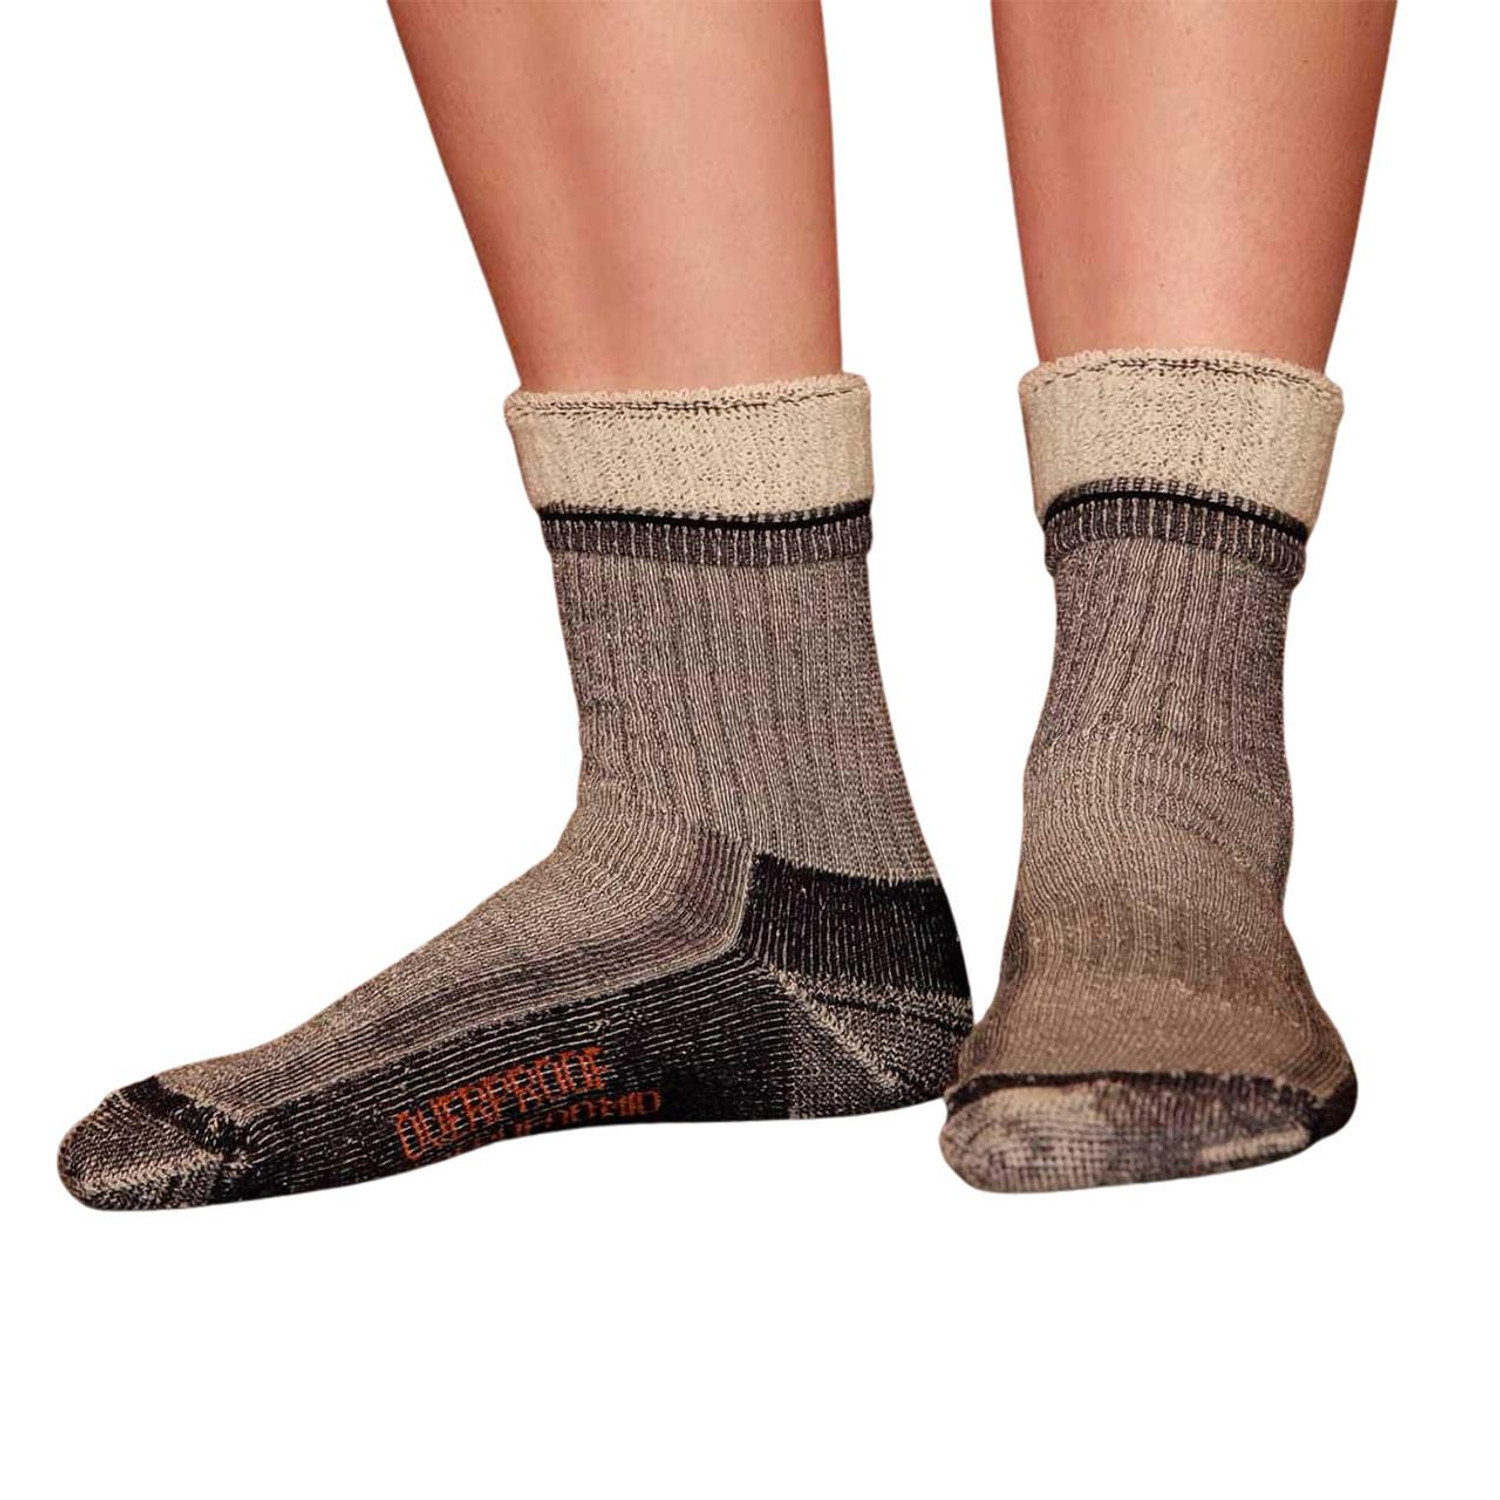 8 Reasons Merino Wool Socks Should Be Your Everyday Sock – Wildly Goods